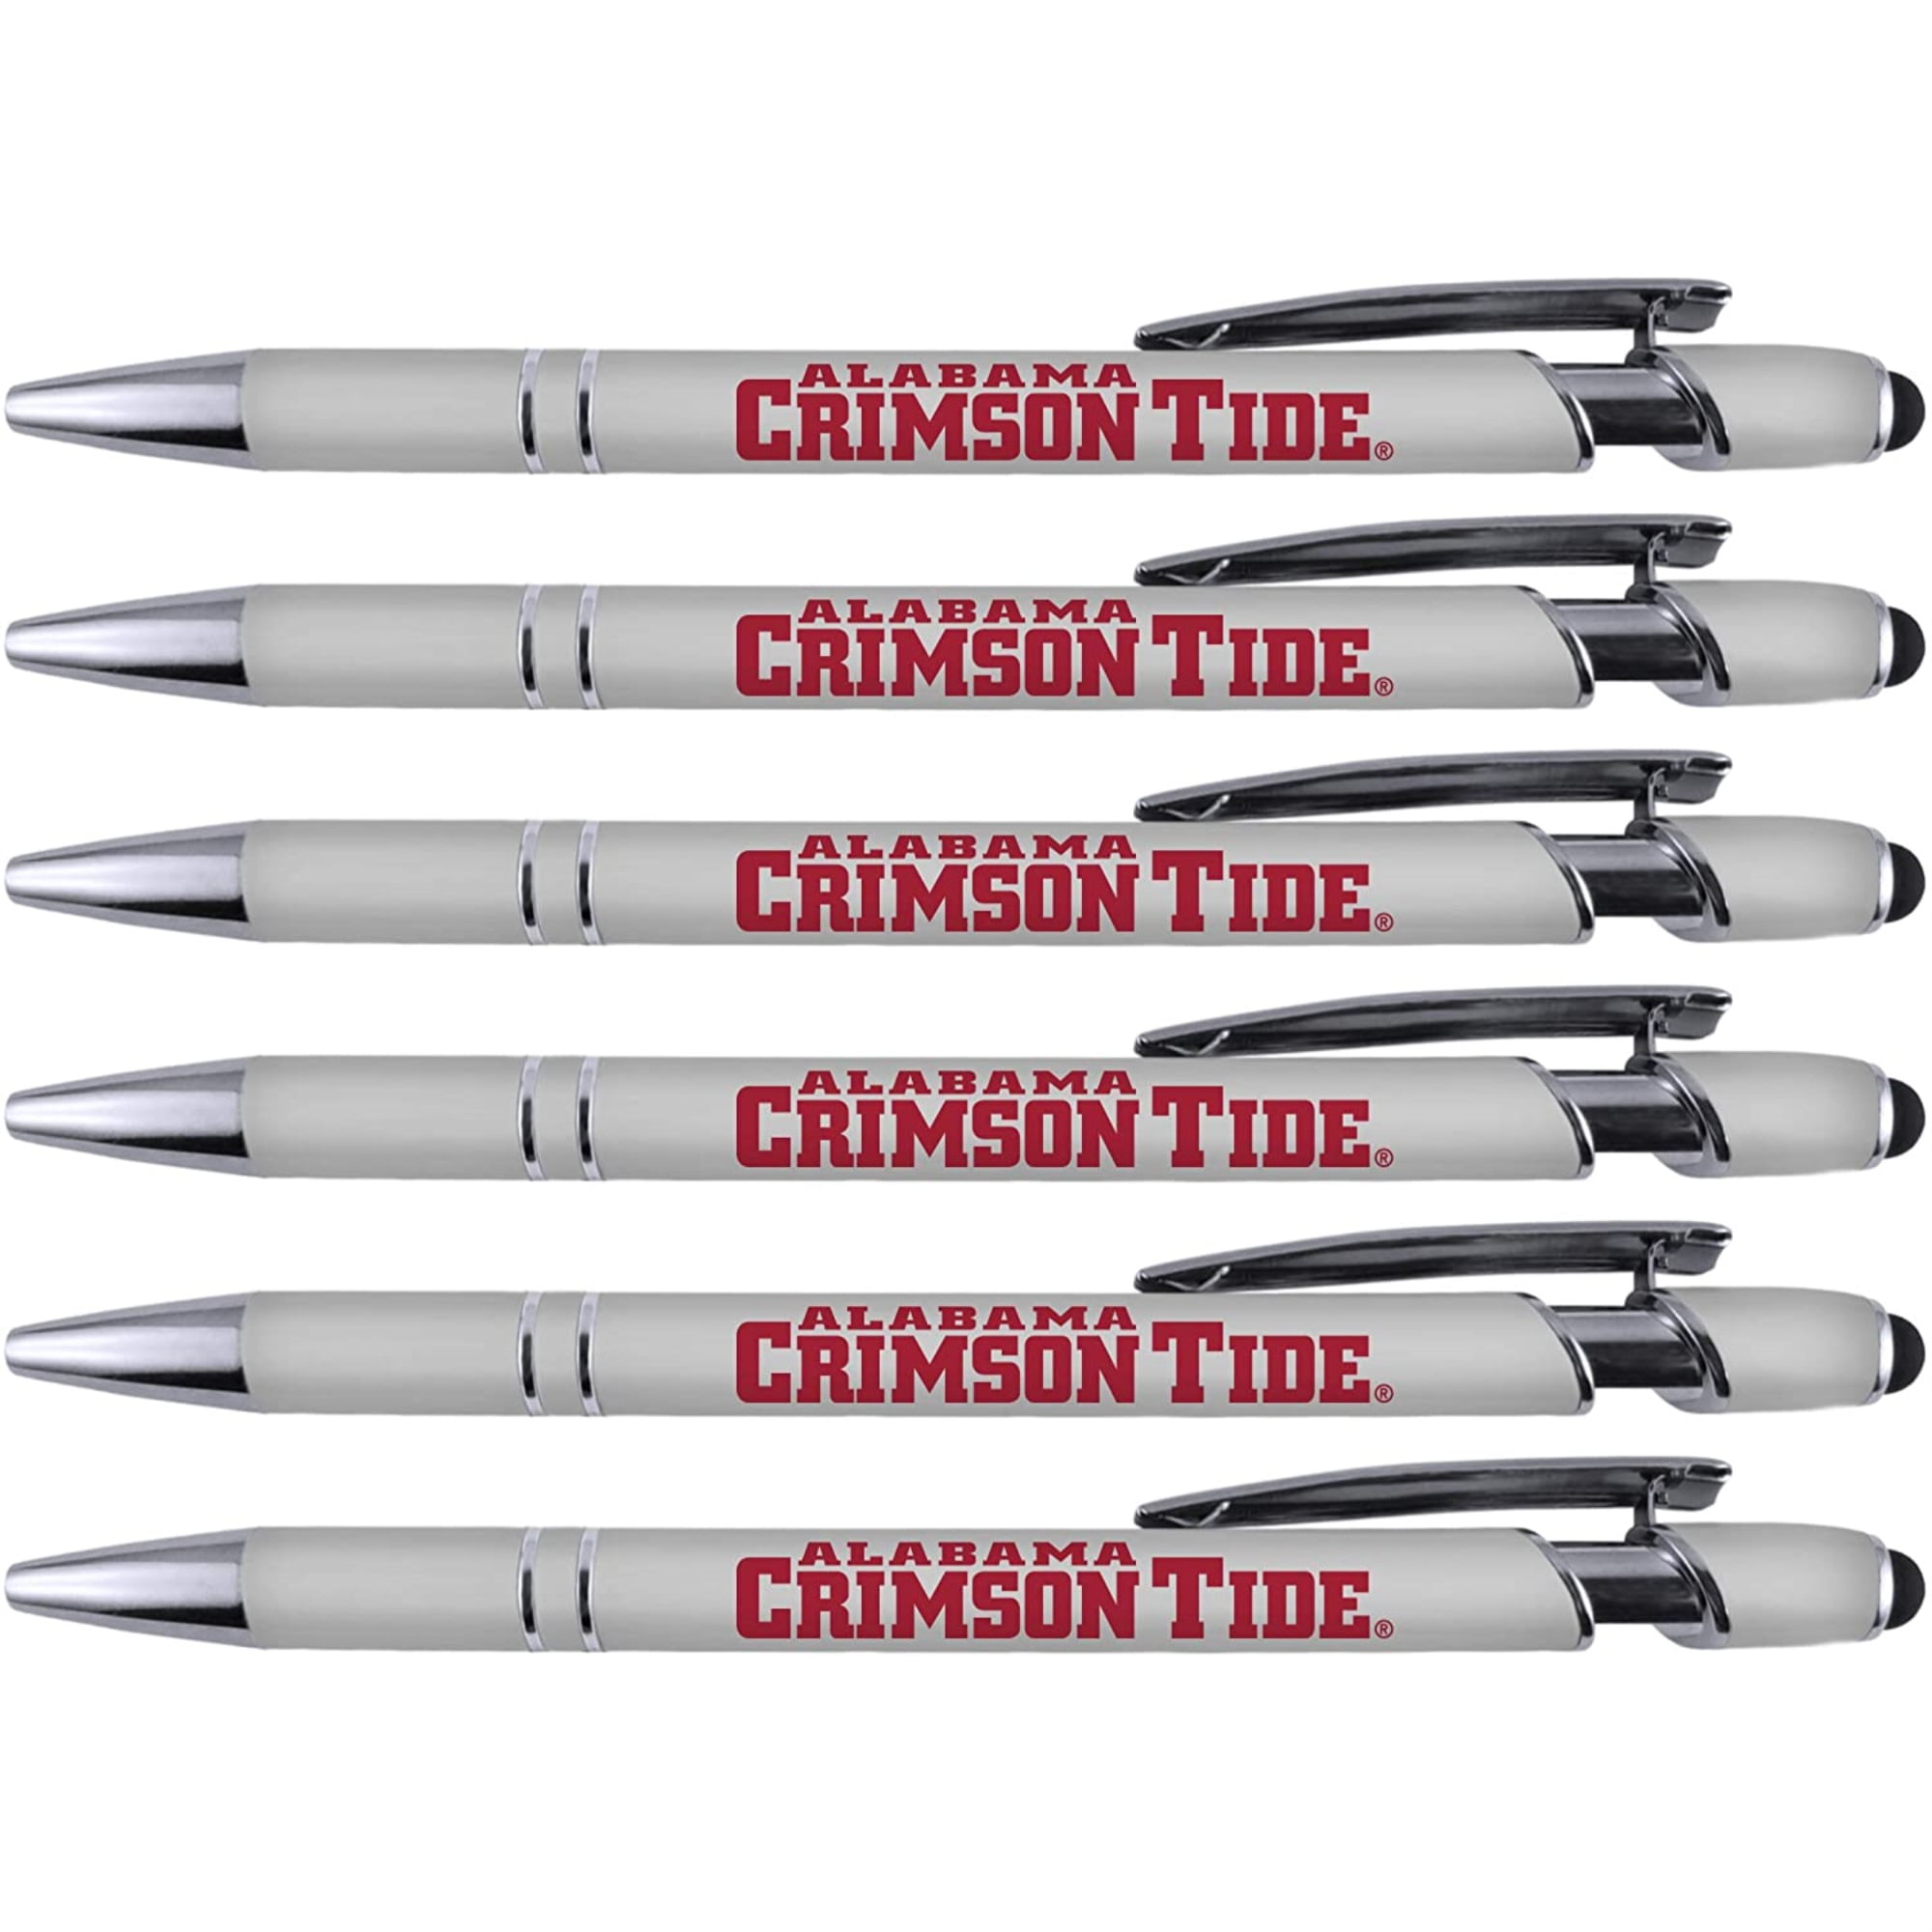 Greeting Pen College Pens Alabama Crimson Tide Braggin' Rights Rotating Message 6 Pen Set 20502 